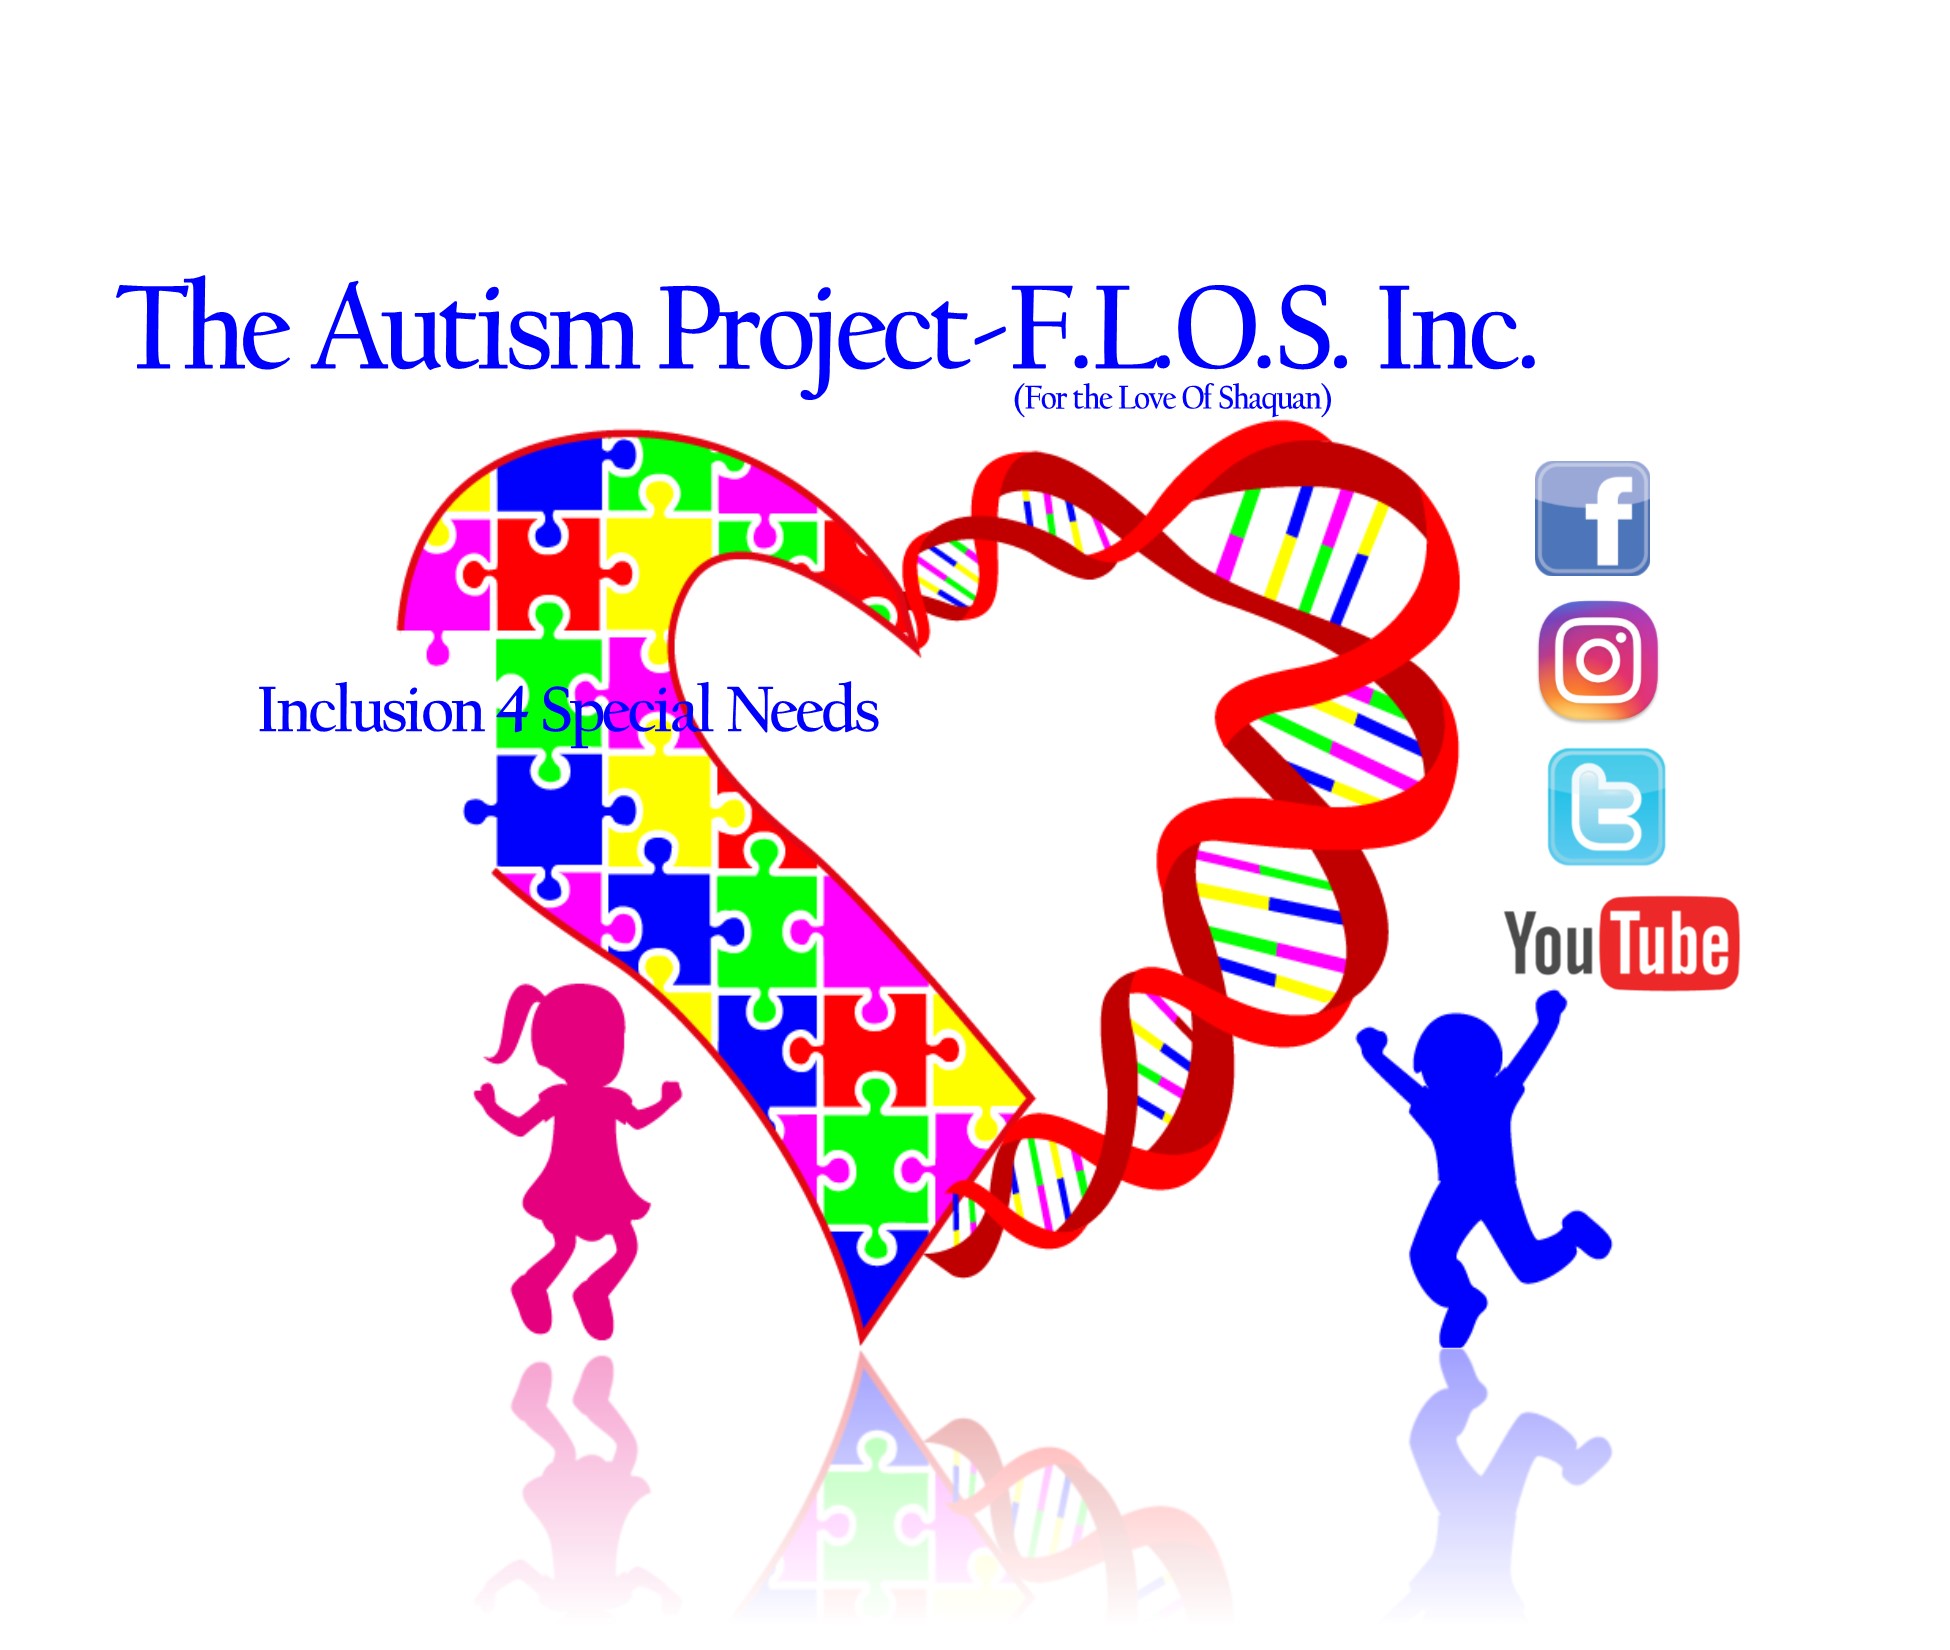 The Autism Project-FLOS Inc. logo